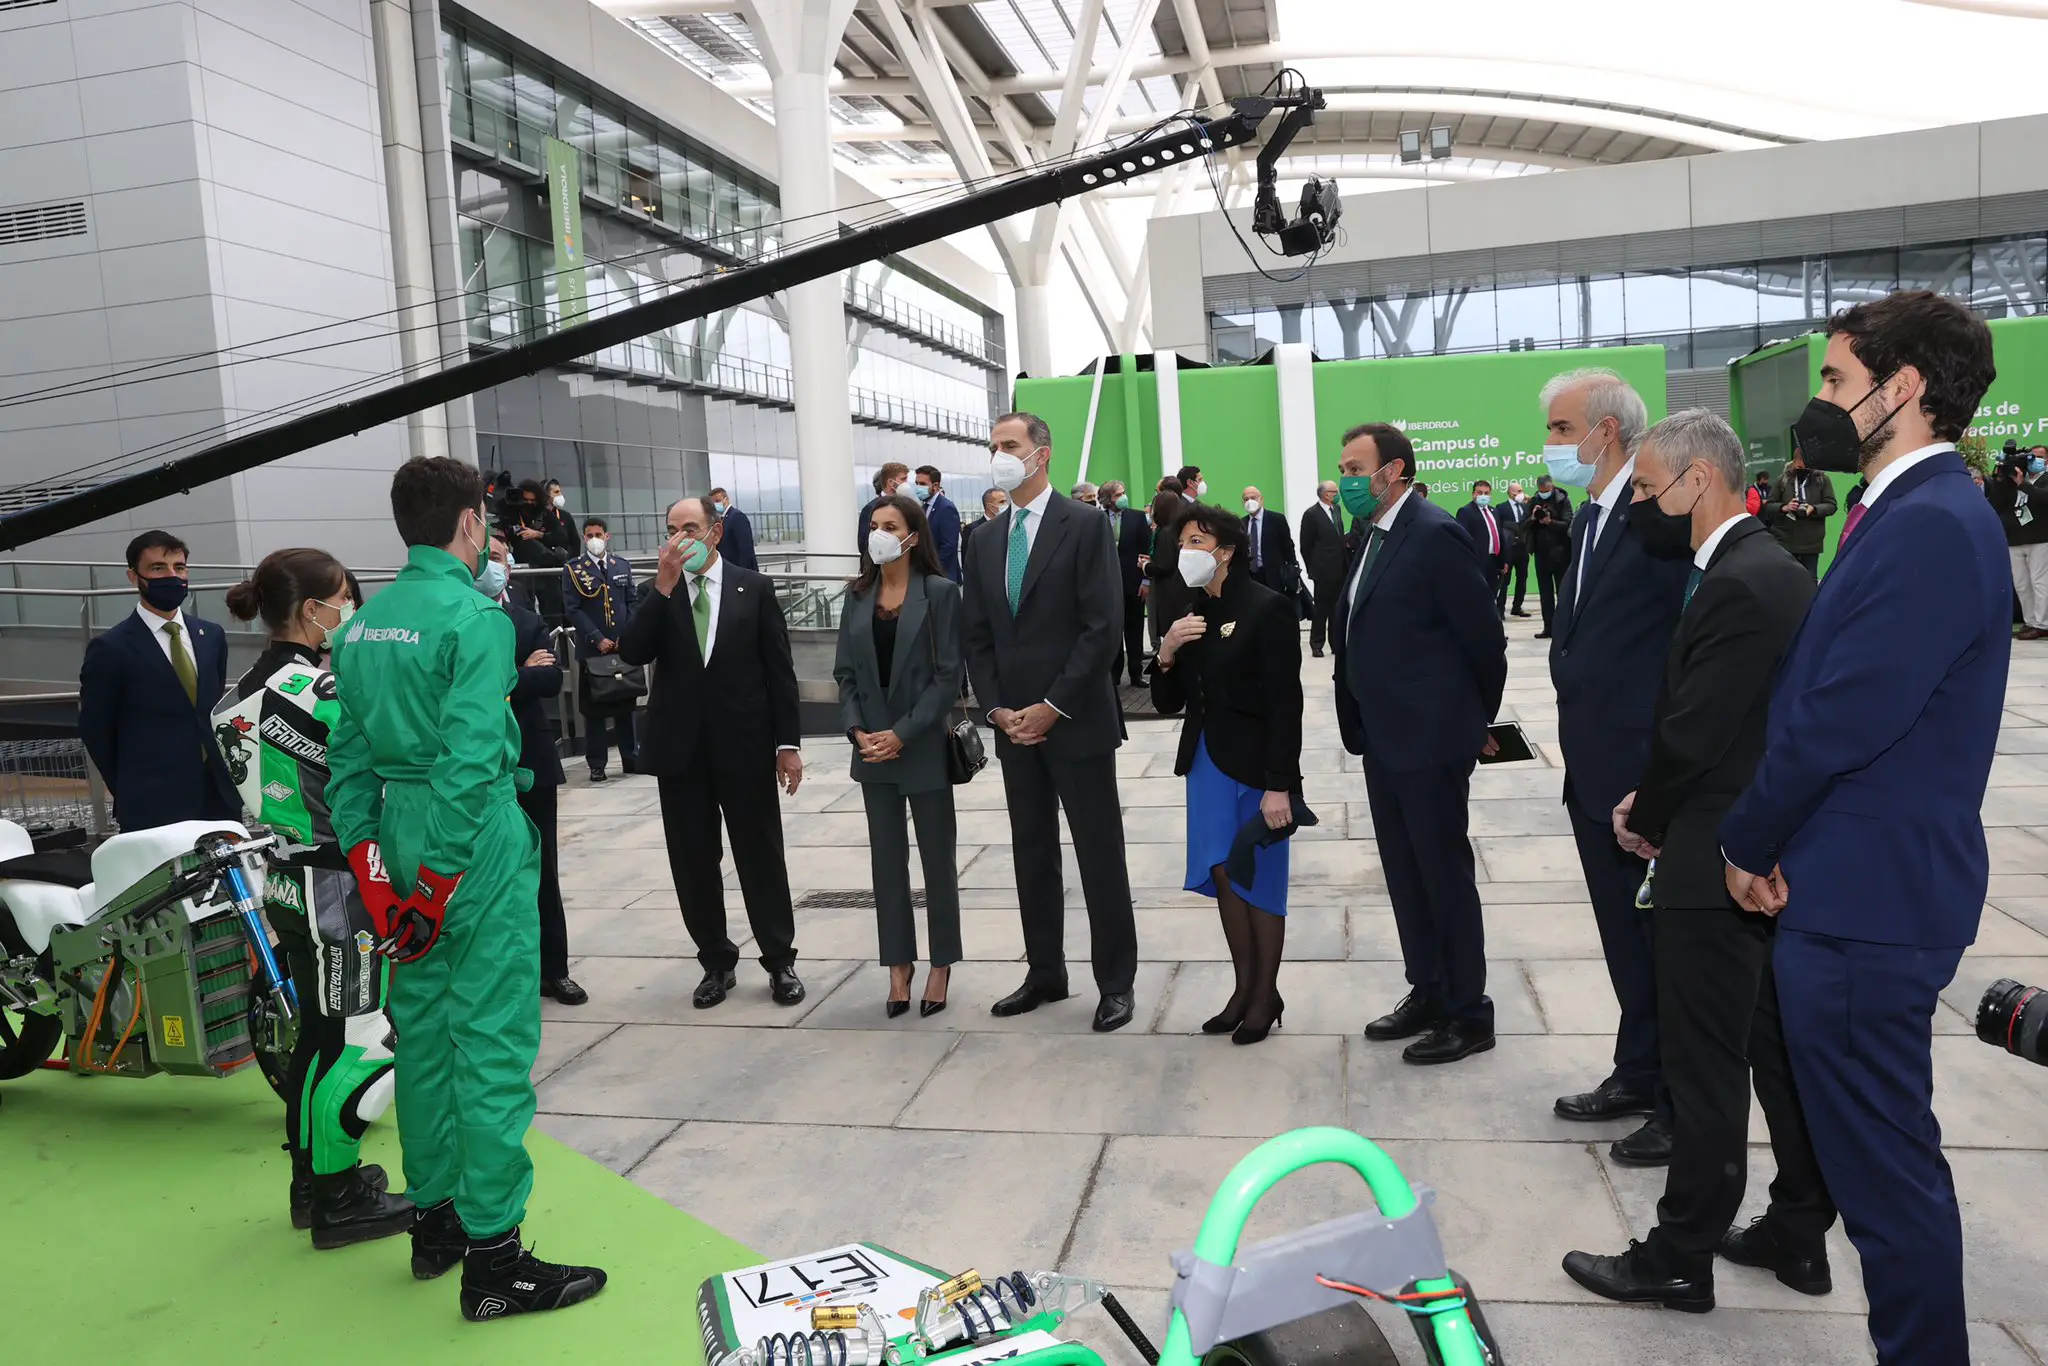 Queen Letizia of Spain debuted Bimba Y Lola Oive-Green suit